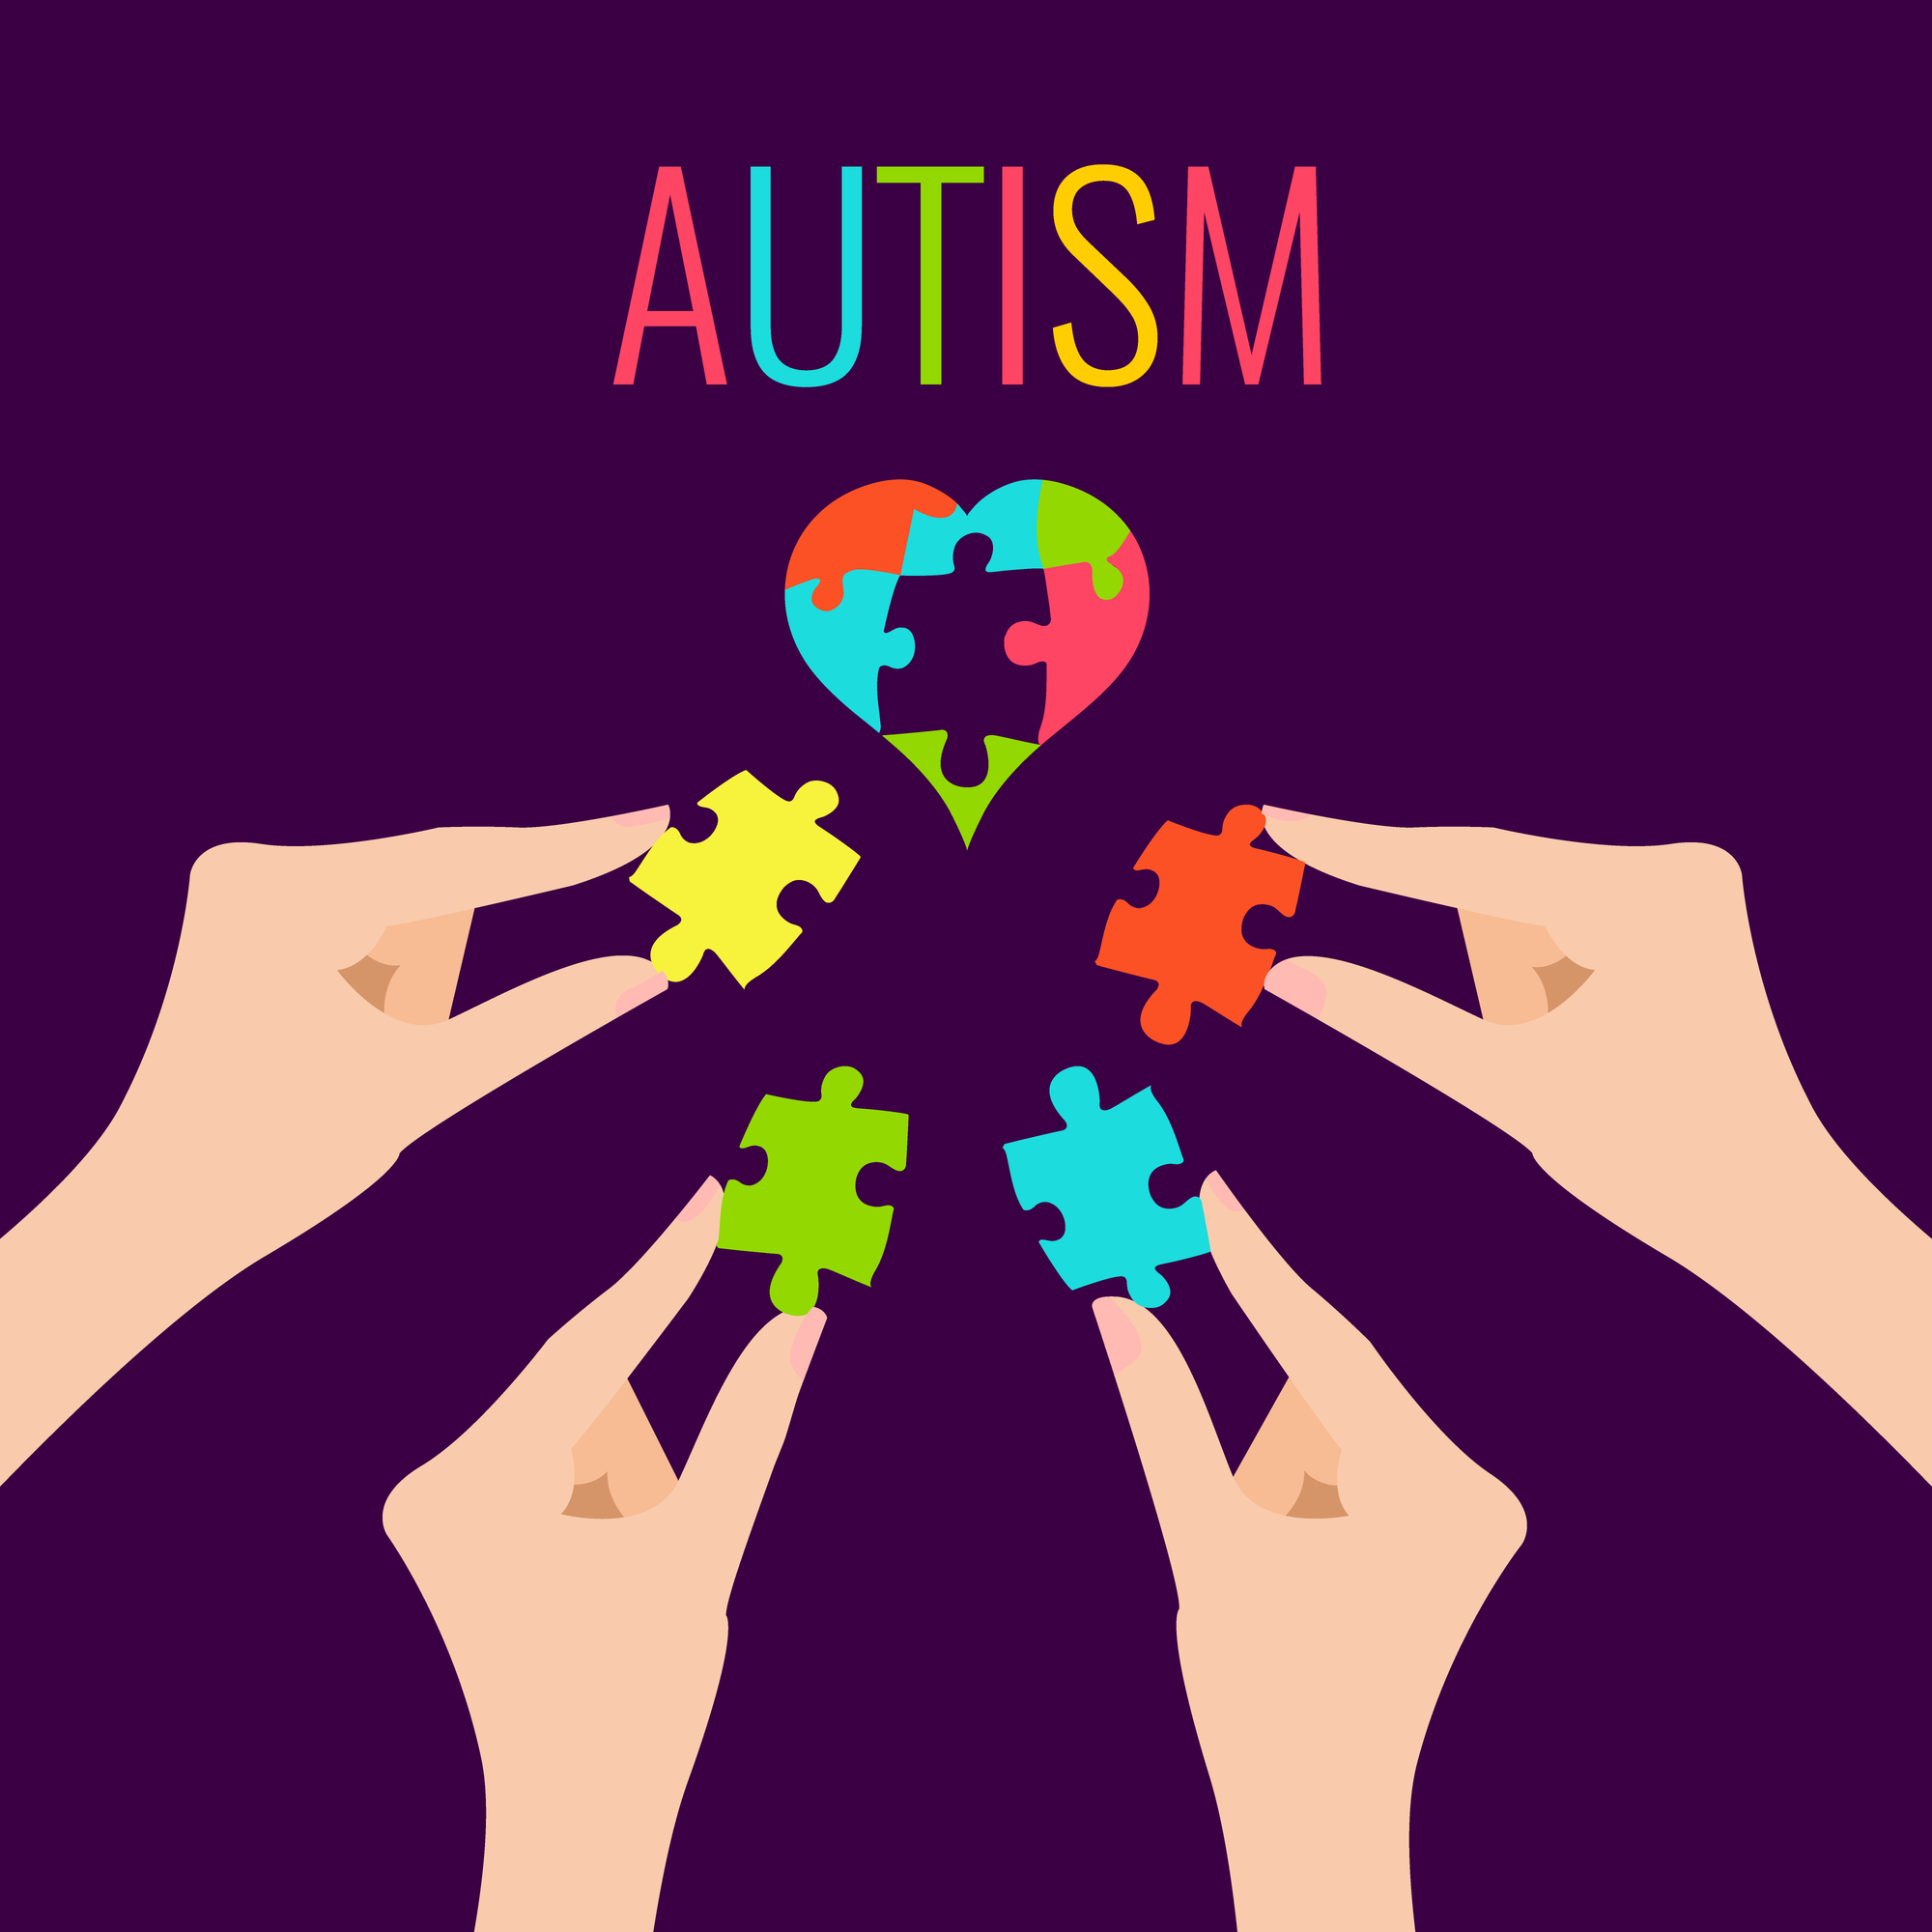 Moderate autism symptoms